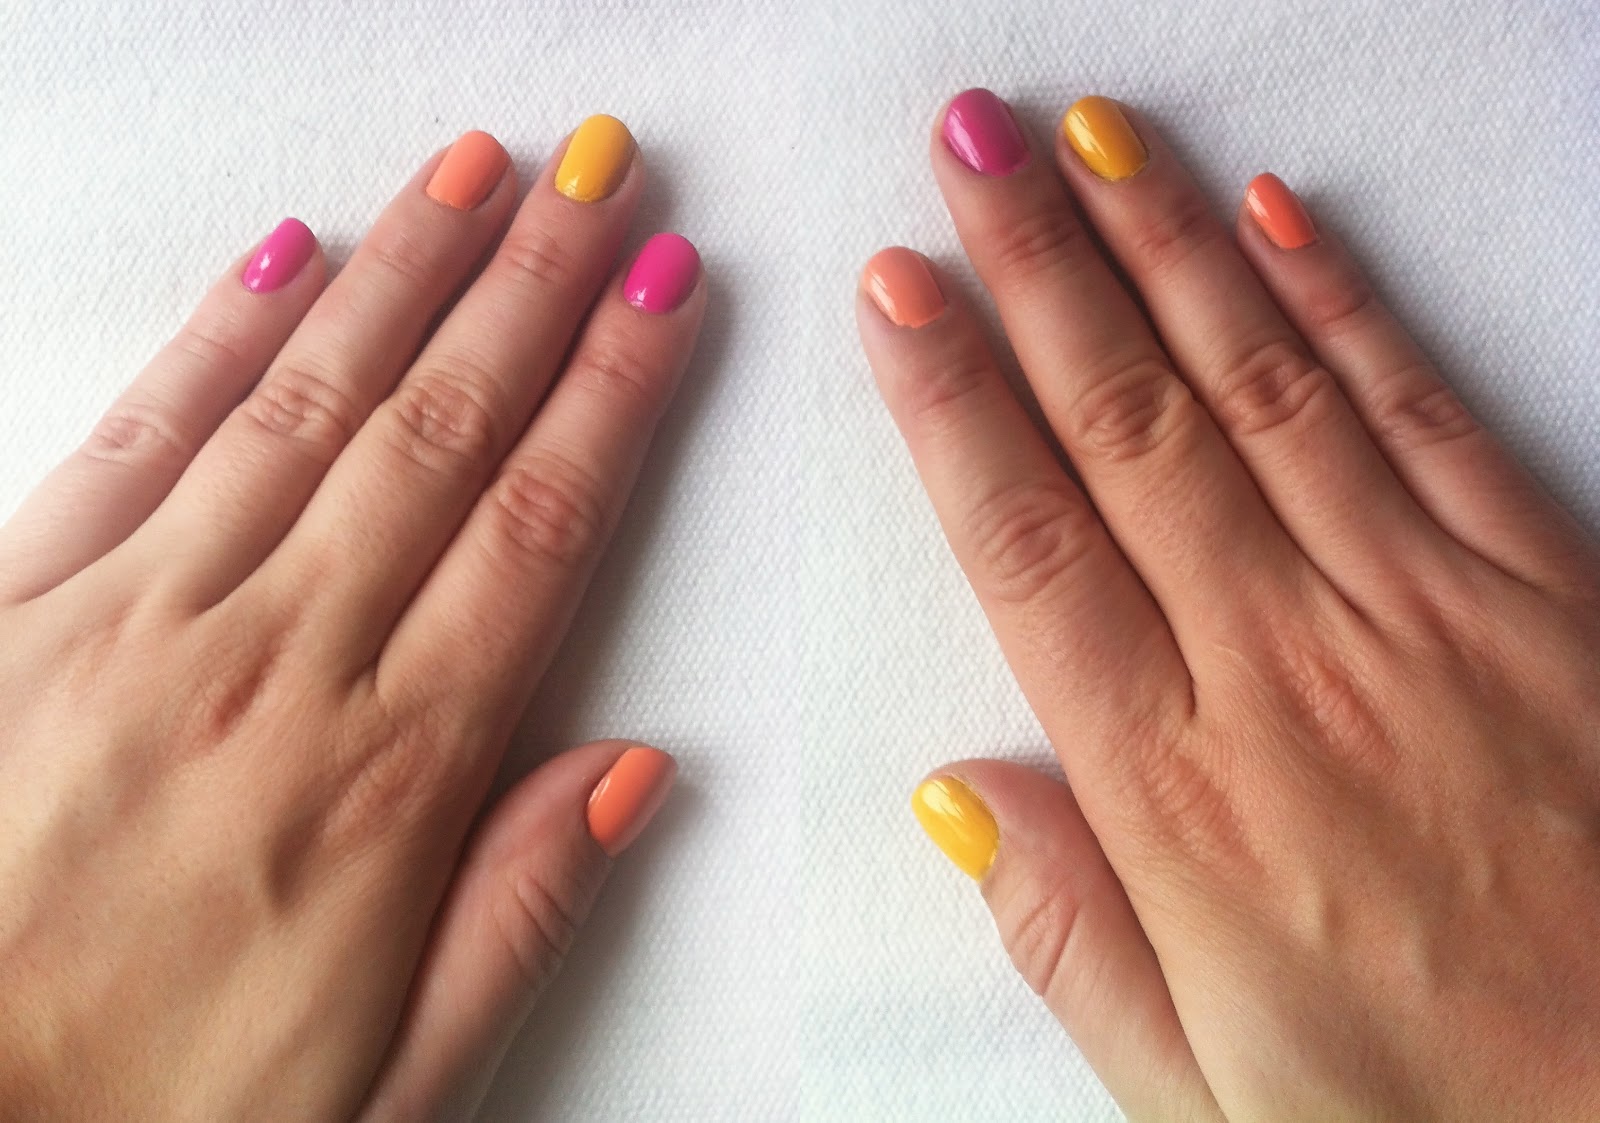 3. Color block nails - wide 2